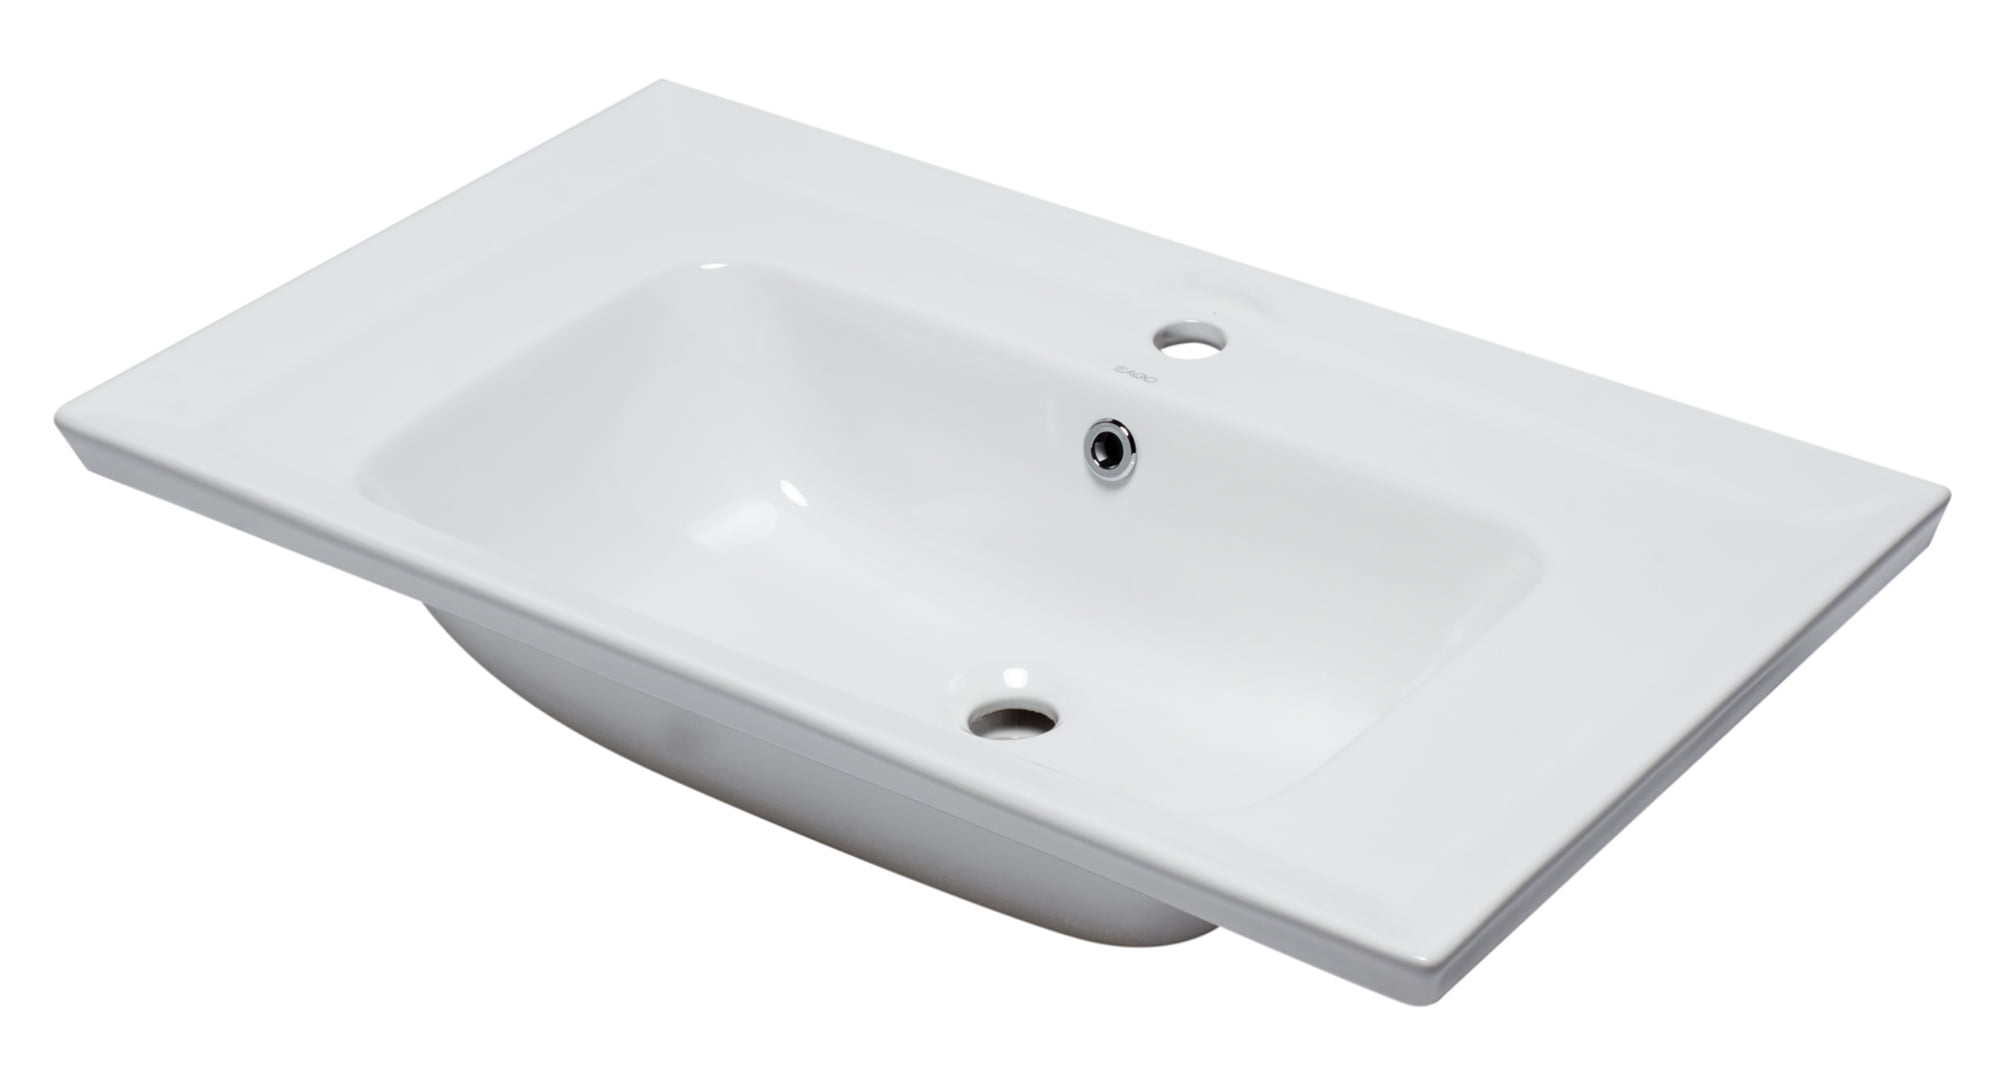 Bh003 White Ceramic 32 X 19 In. Rectangular Drop In Sink